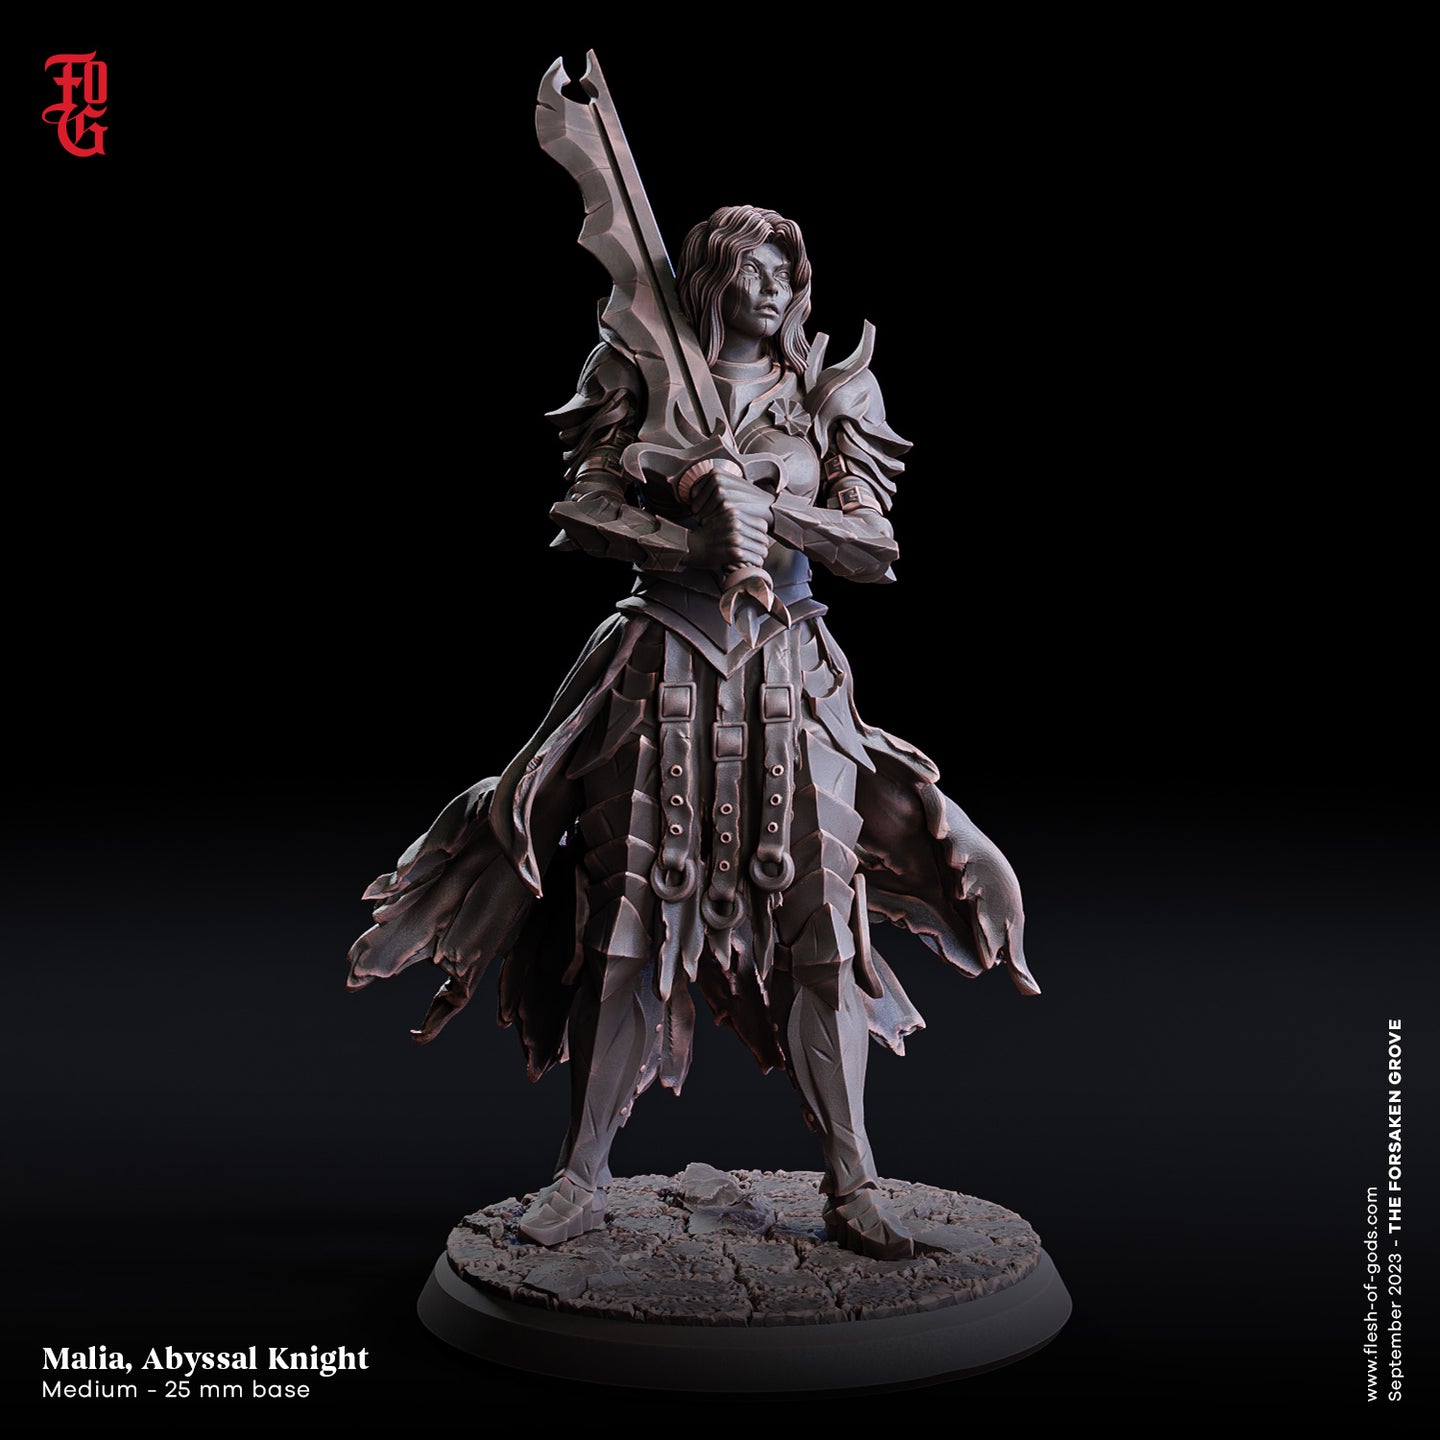 Malia, Abyssal Knight - The Forsaken Grove - Flesh of Gods - Wargaming D&D DnD